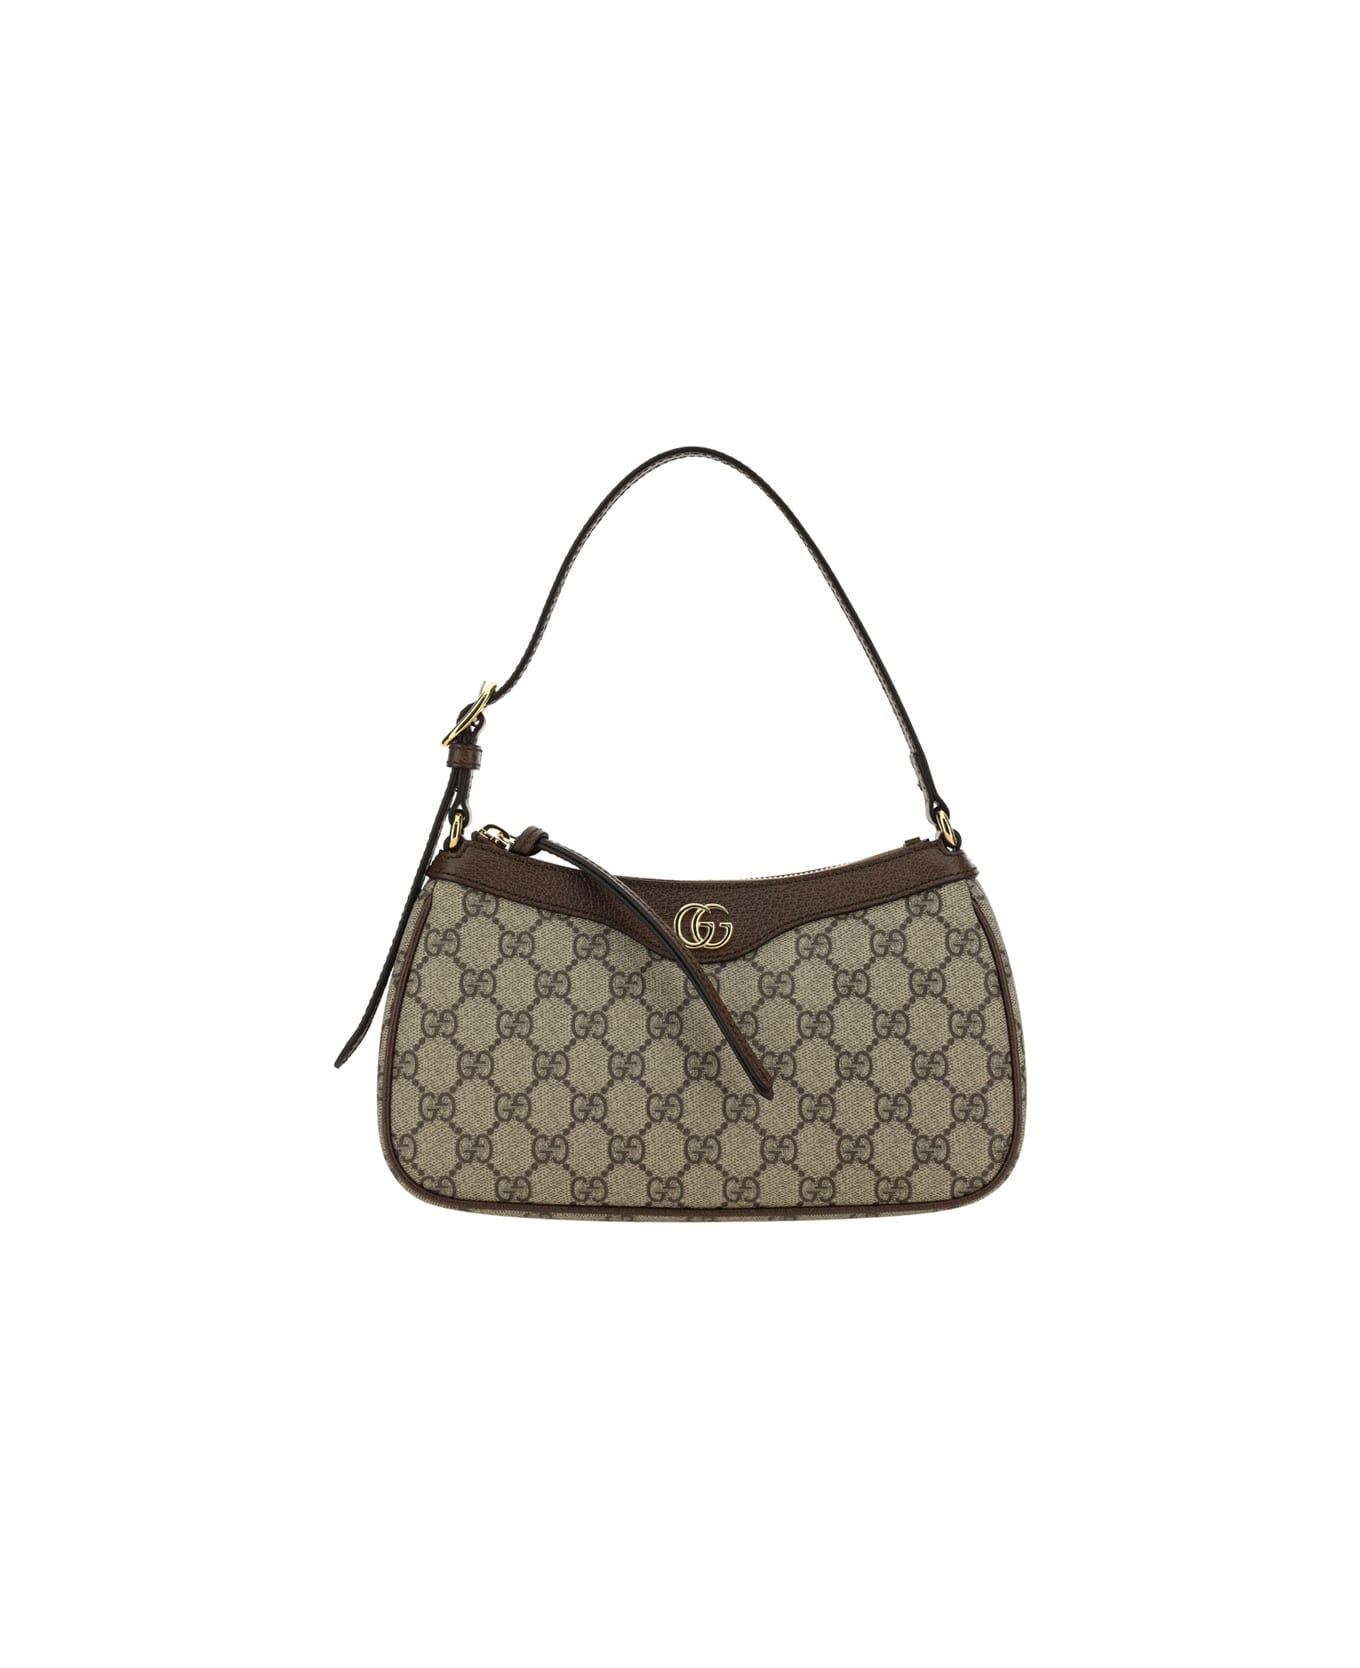 Gucci Ophidia Shoulder Bag - Ebony